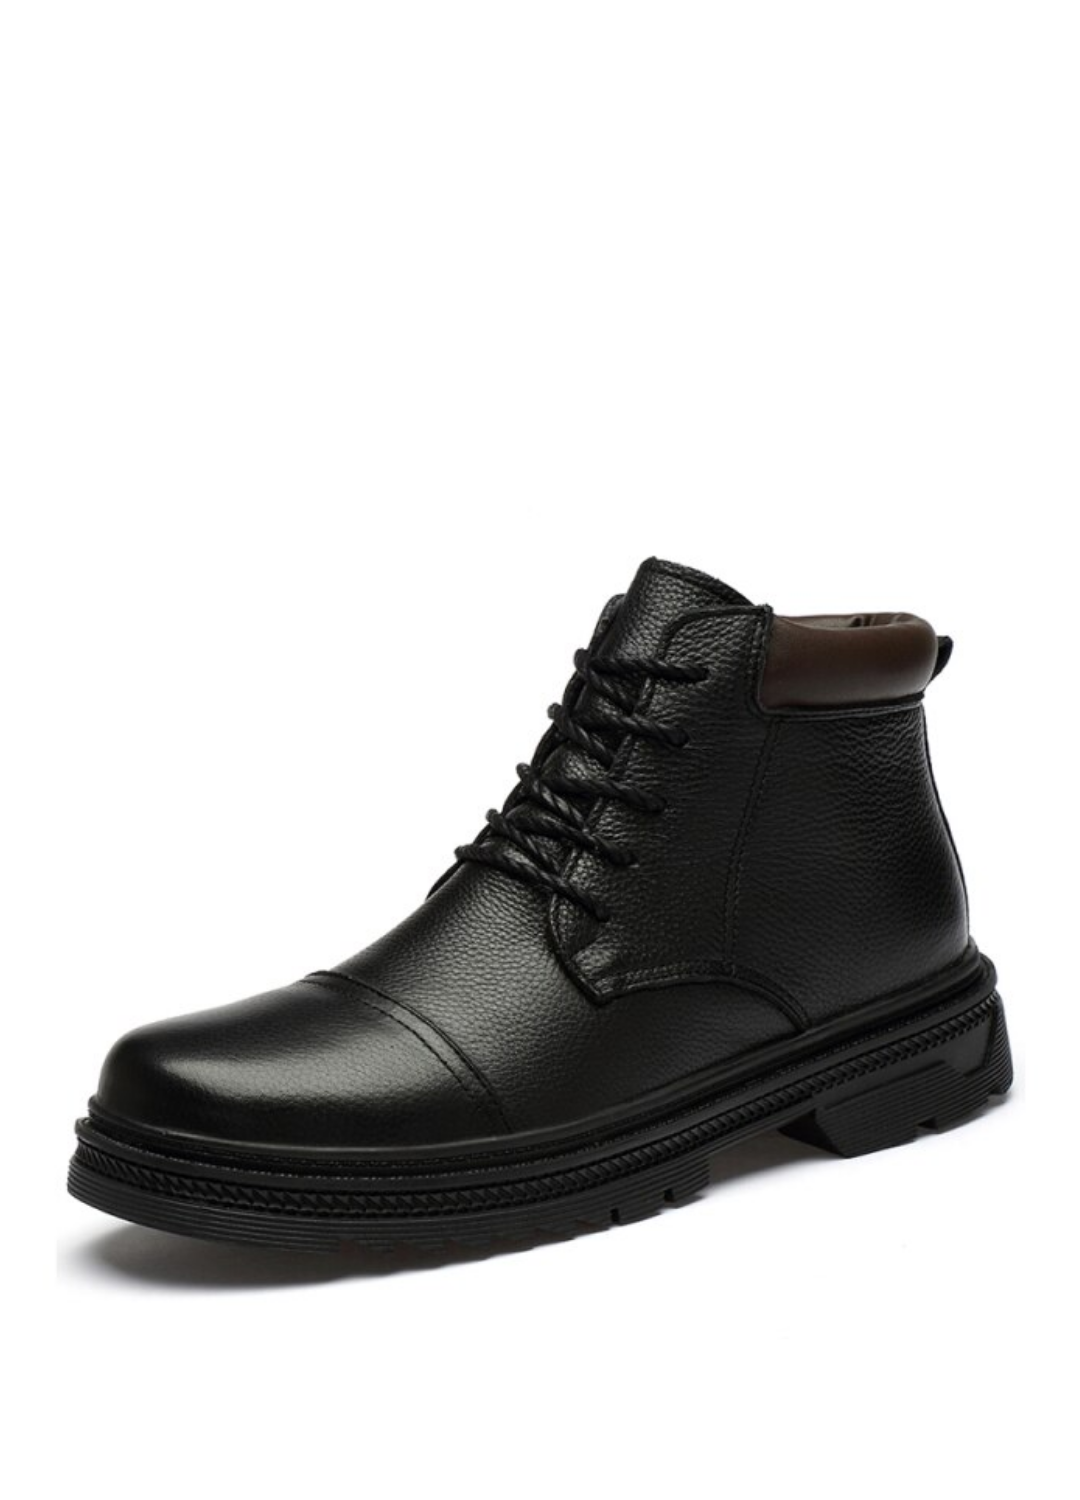 USS Shoes Rodry Men's Luxury Boots | ussshoes.com – USS® Shoes